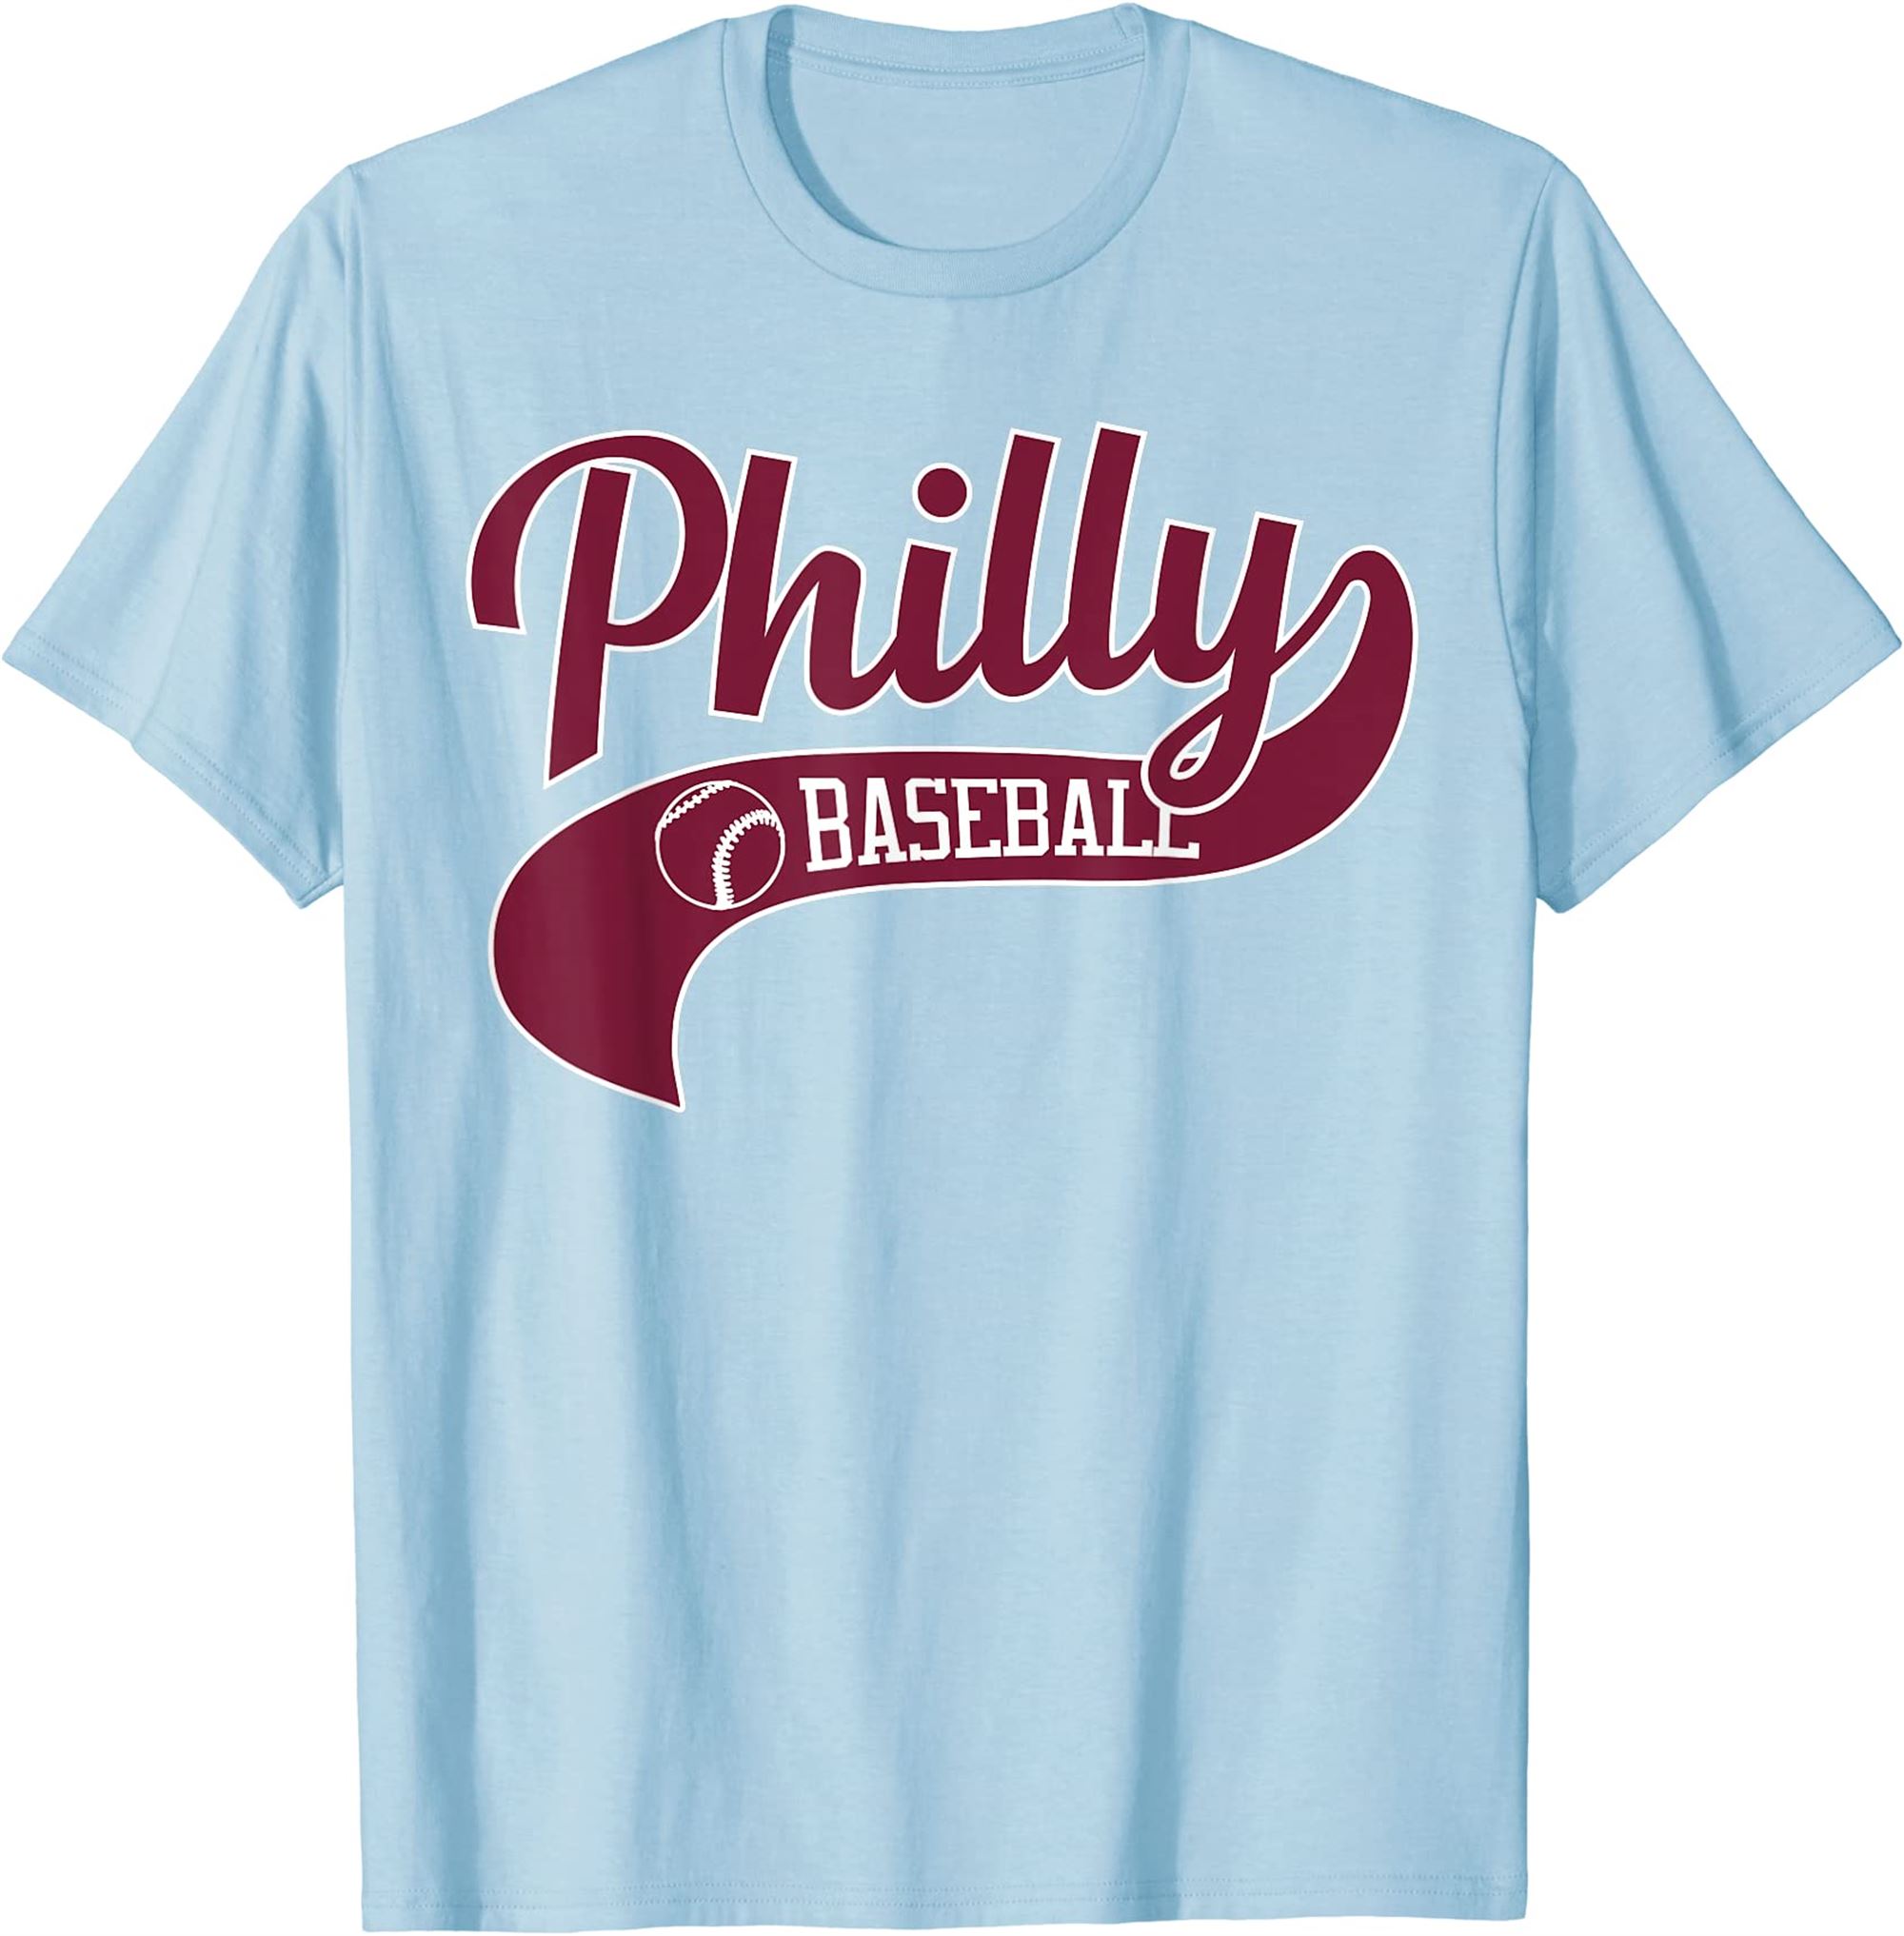 Retro Philadelphia Baseball Vintage Philly Swoosh T-shirt Size Up To 5xl